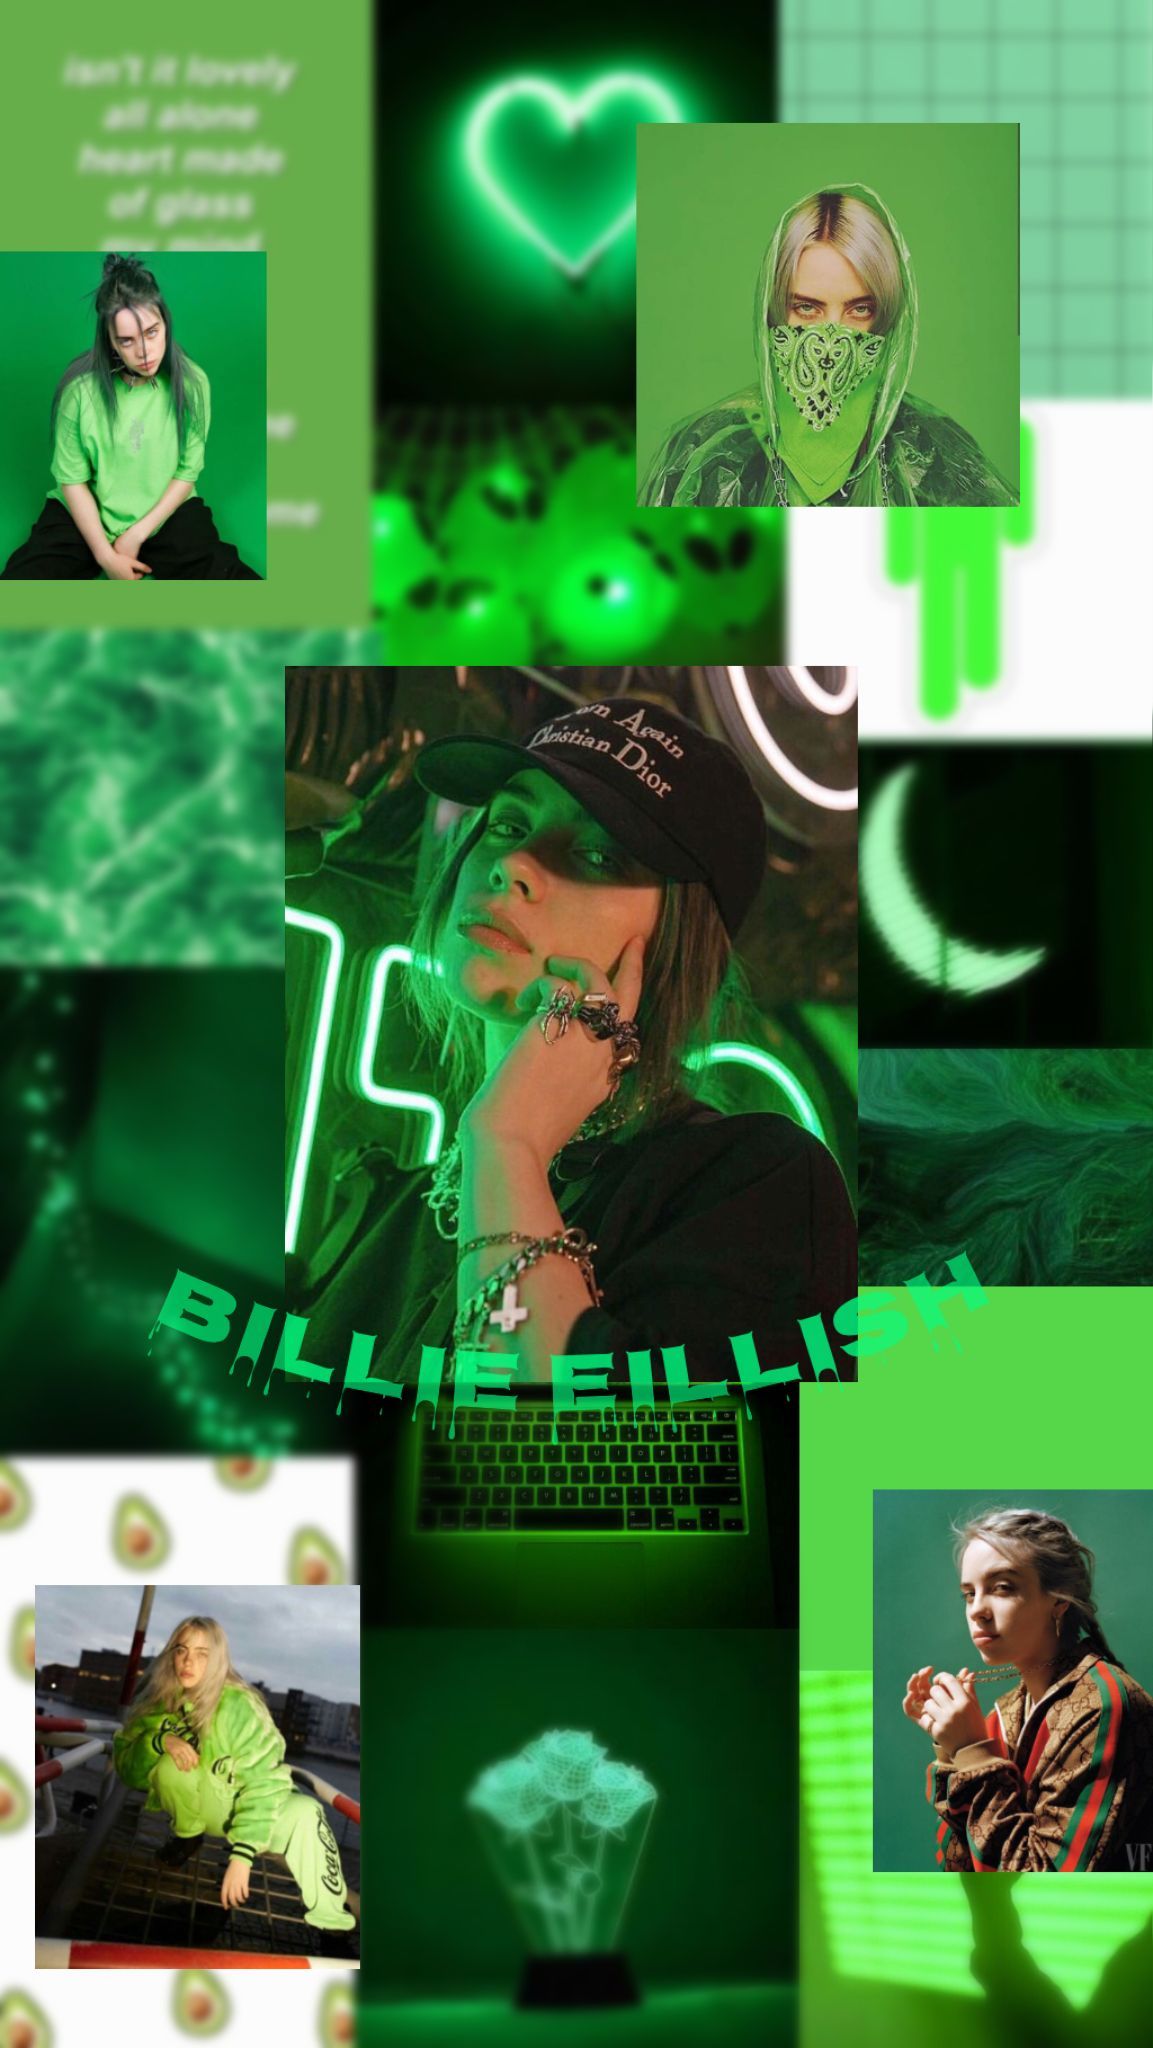 Billie Eilish aesthetic wallpaper I made for my phone! - Billie Eilish